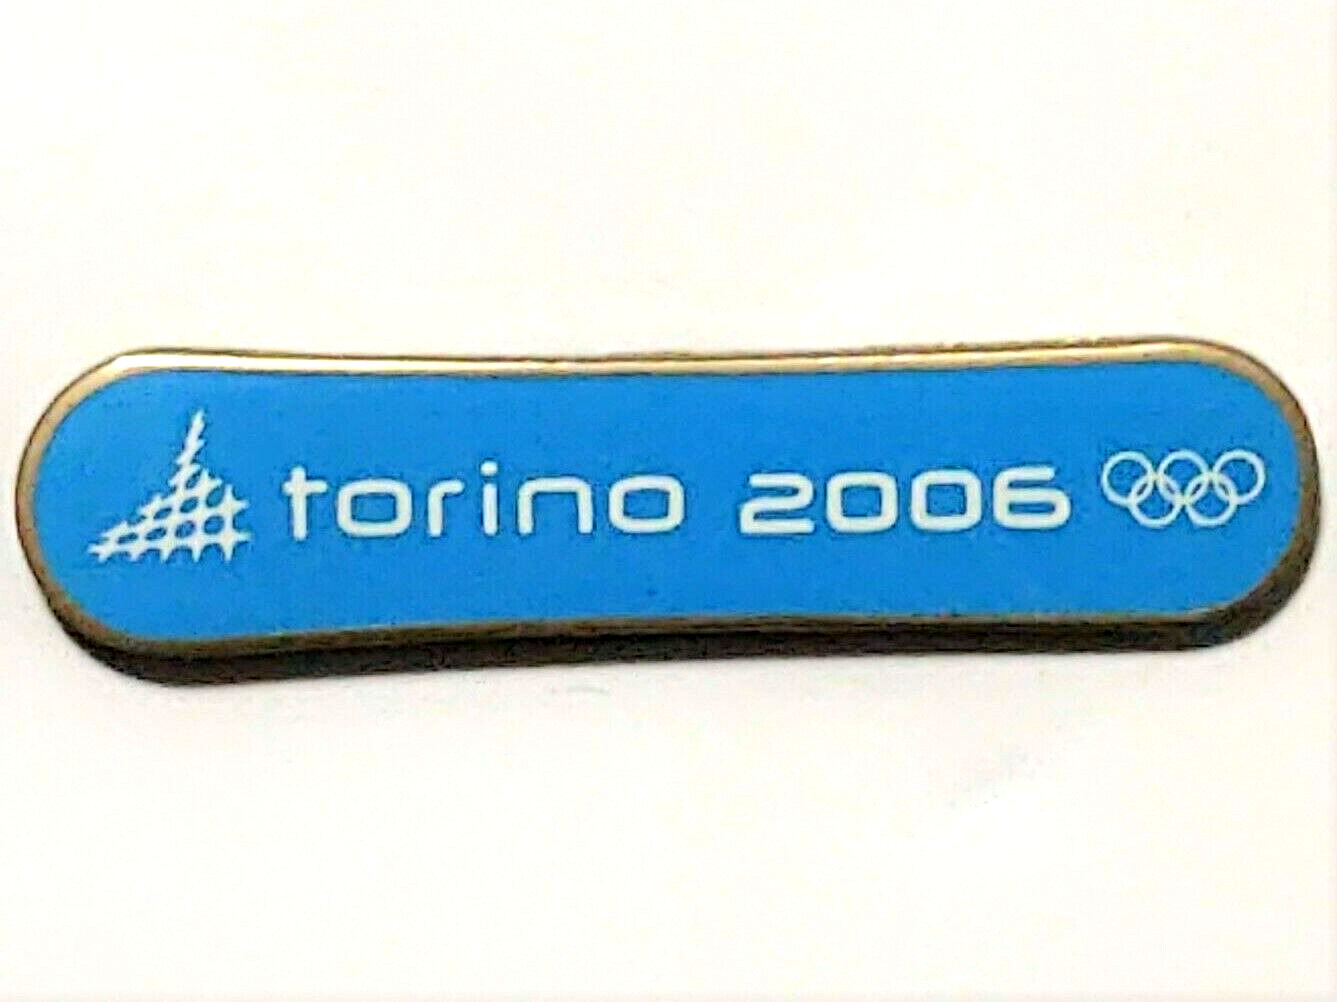 2006 Torino Olympics Blue Snowboard Snowboarding Hat Pin Lapel Pin